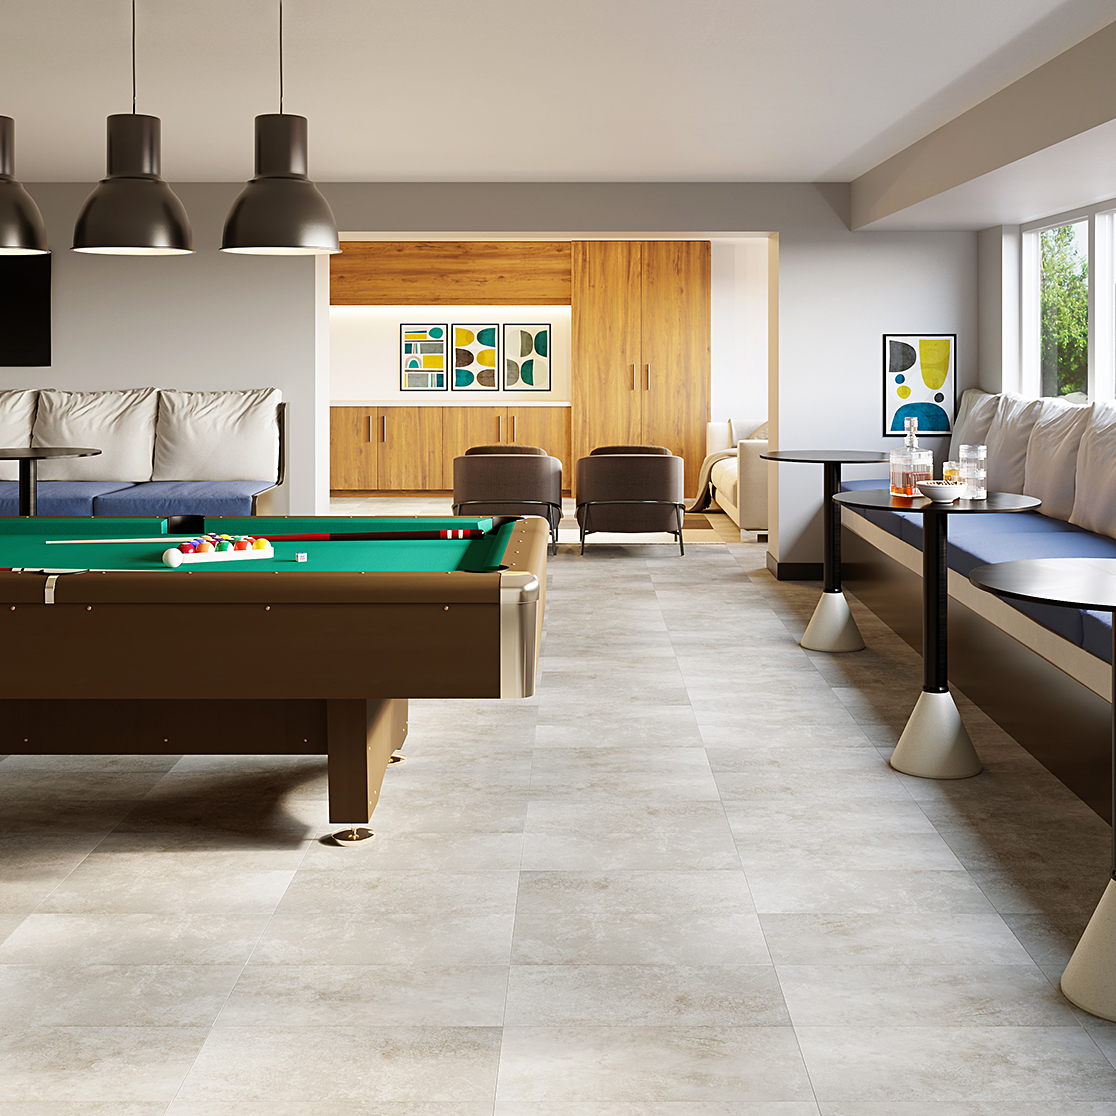 Tilebar stone-look room with large grey floor tiles 